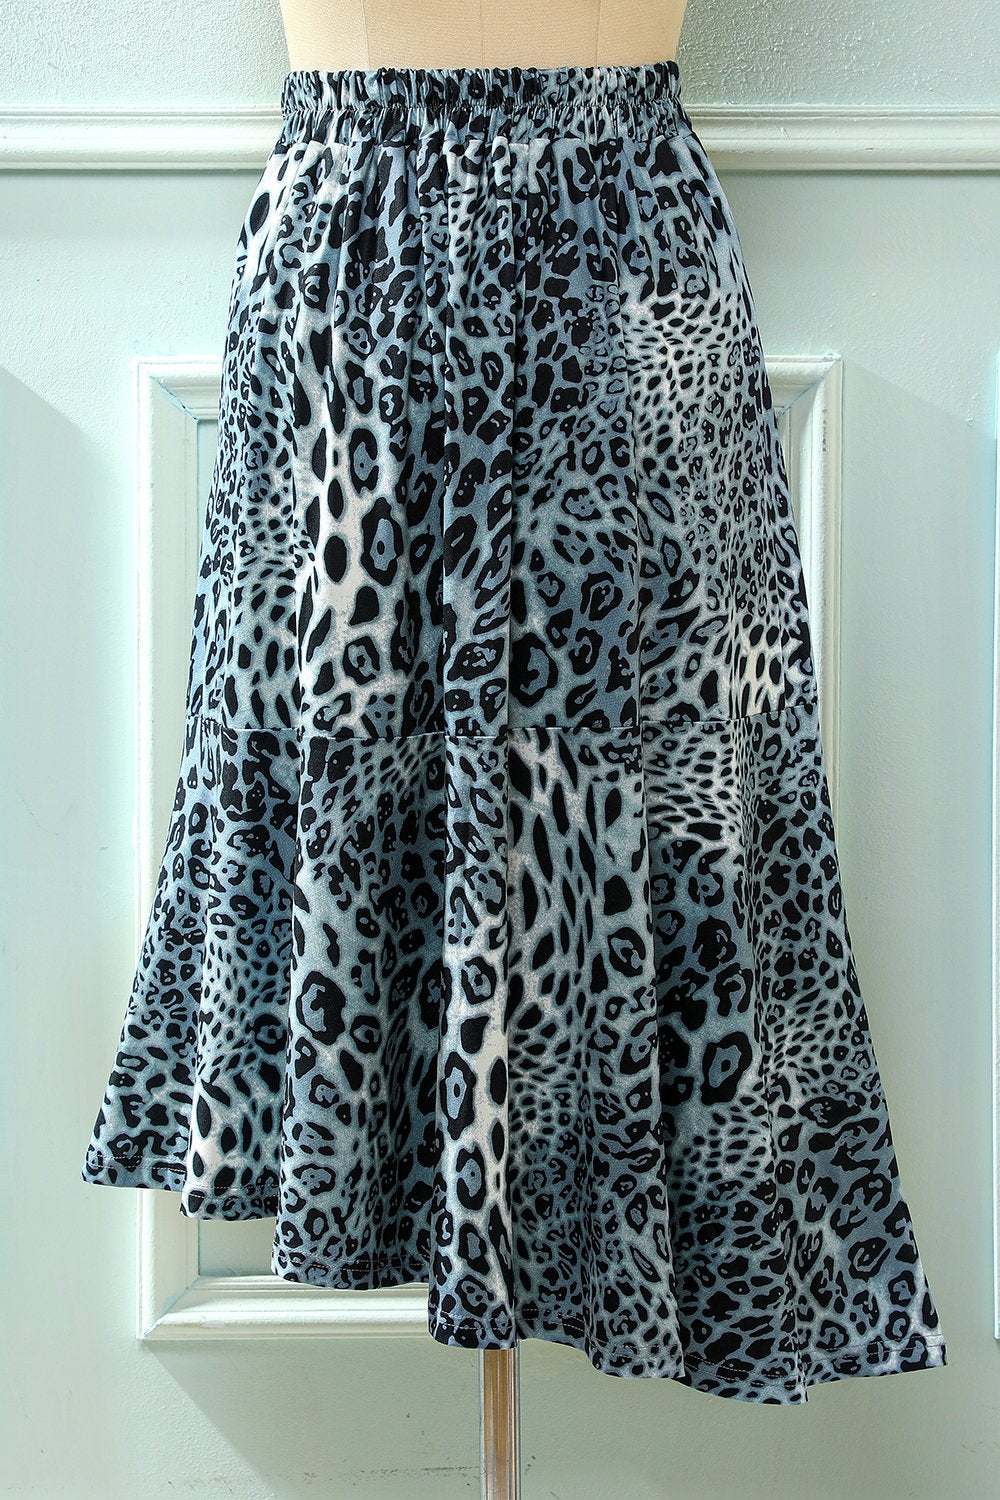 Leopard Printed Skirt